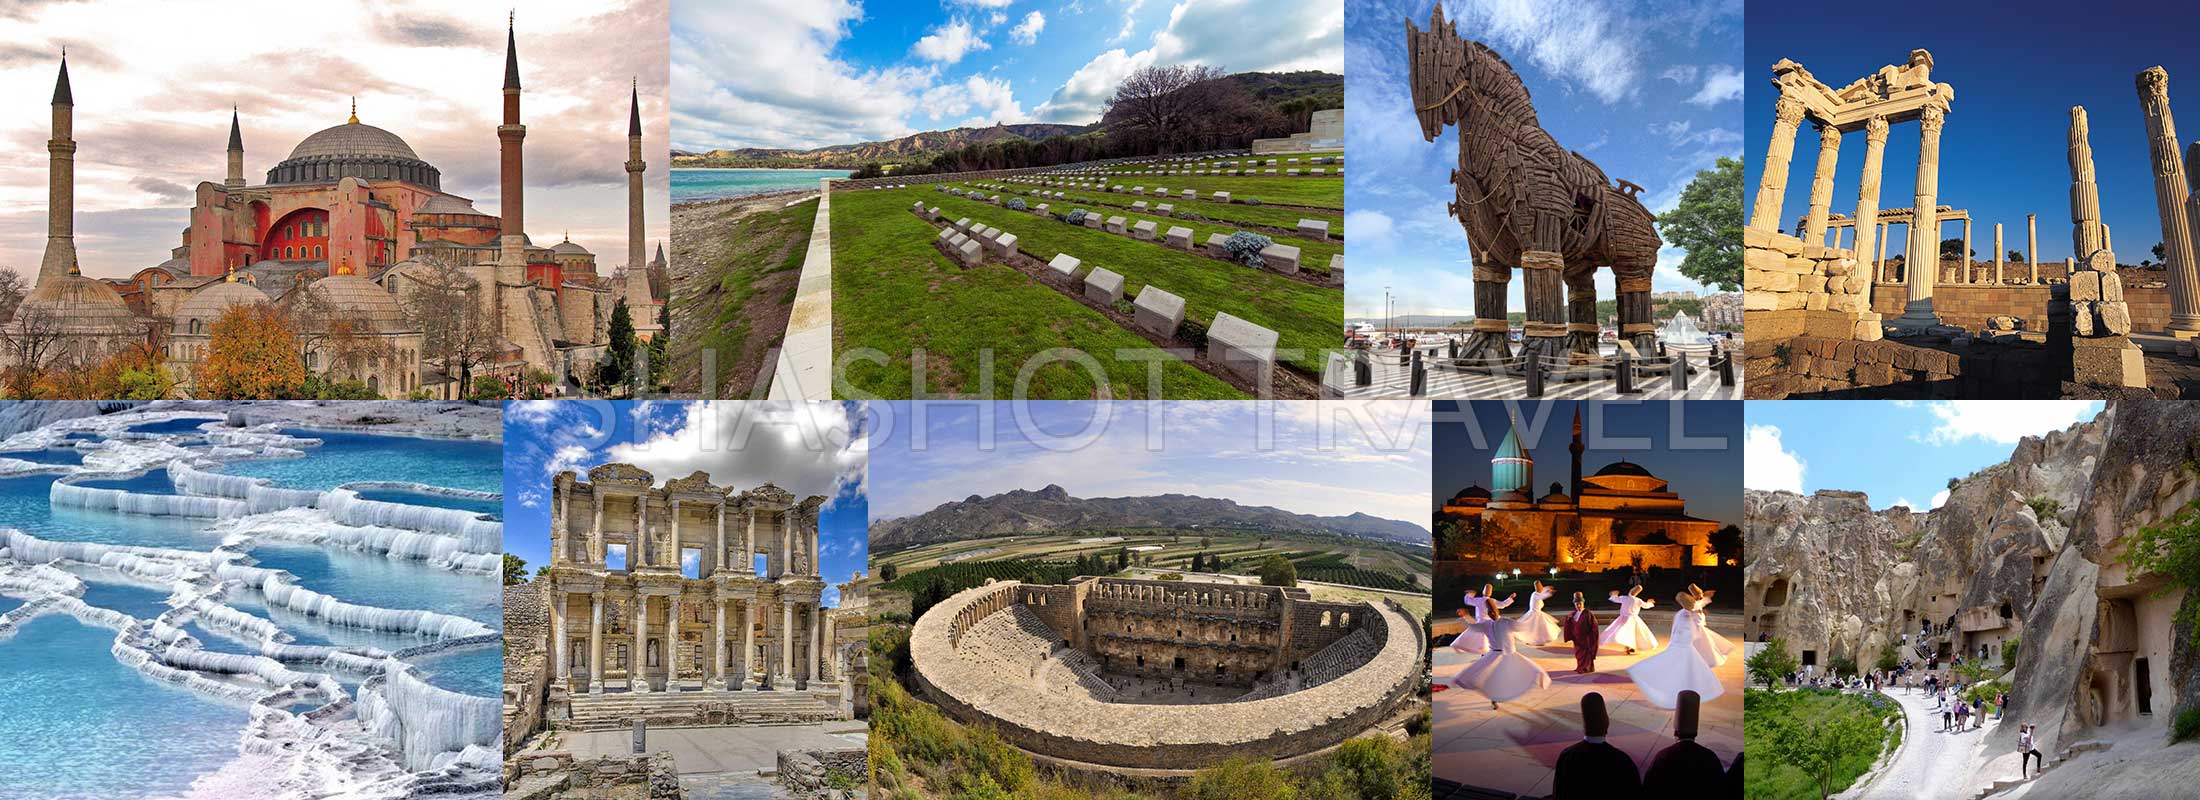 turkey-package-tours-14-days-istanbul-hagia-sophia-museum-blue-mosque-bosphorus-gallipoli-troy--ephesus-pamukkale-aspendos-antalya-konya-cappadocia-